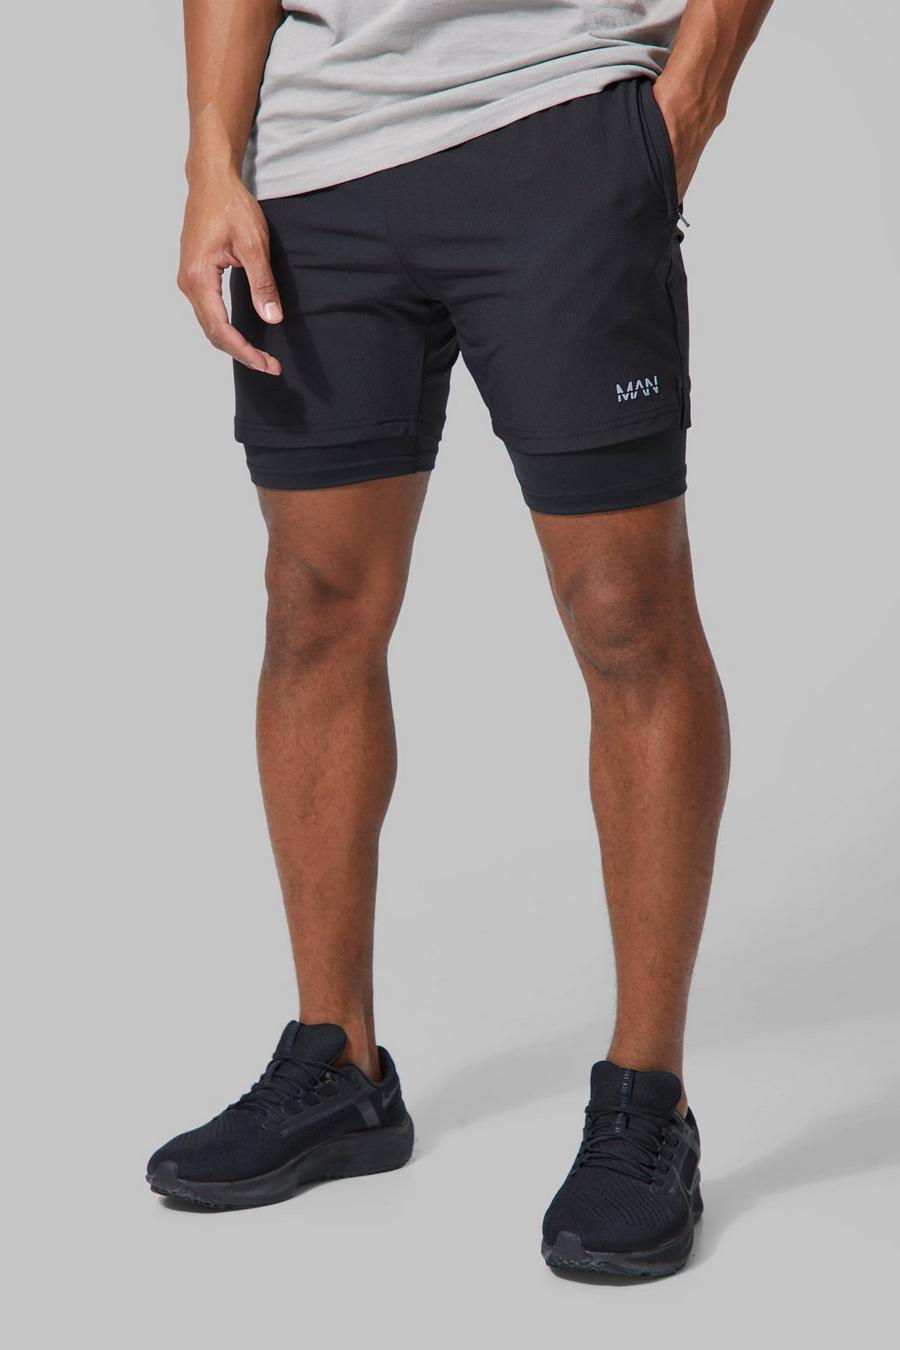 Pantaloncini 2 in 1 Man Active Gym, Black